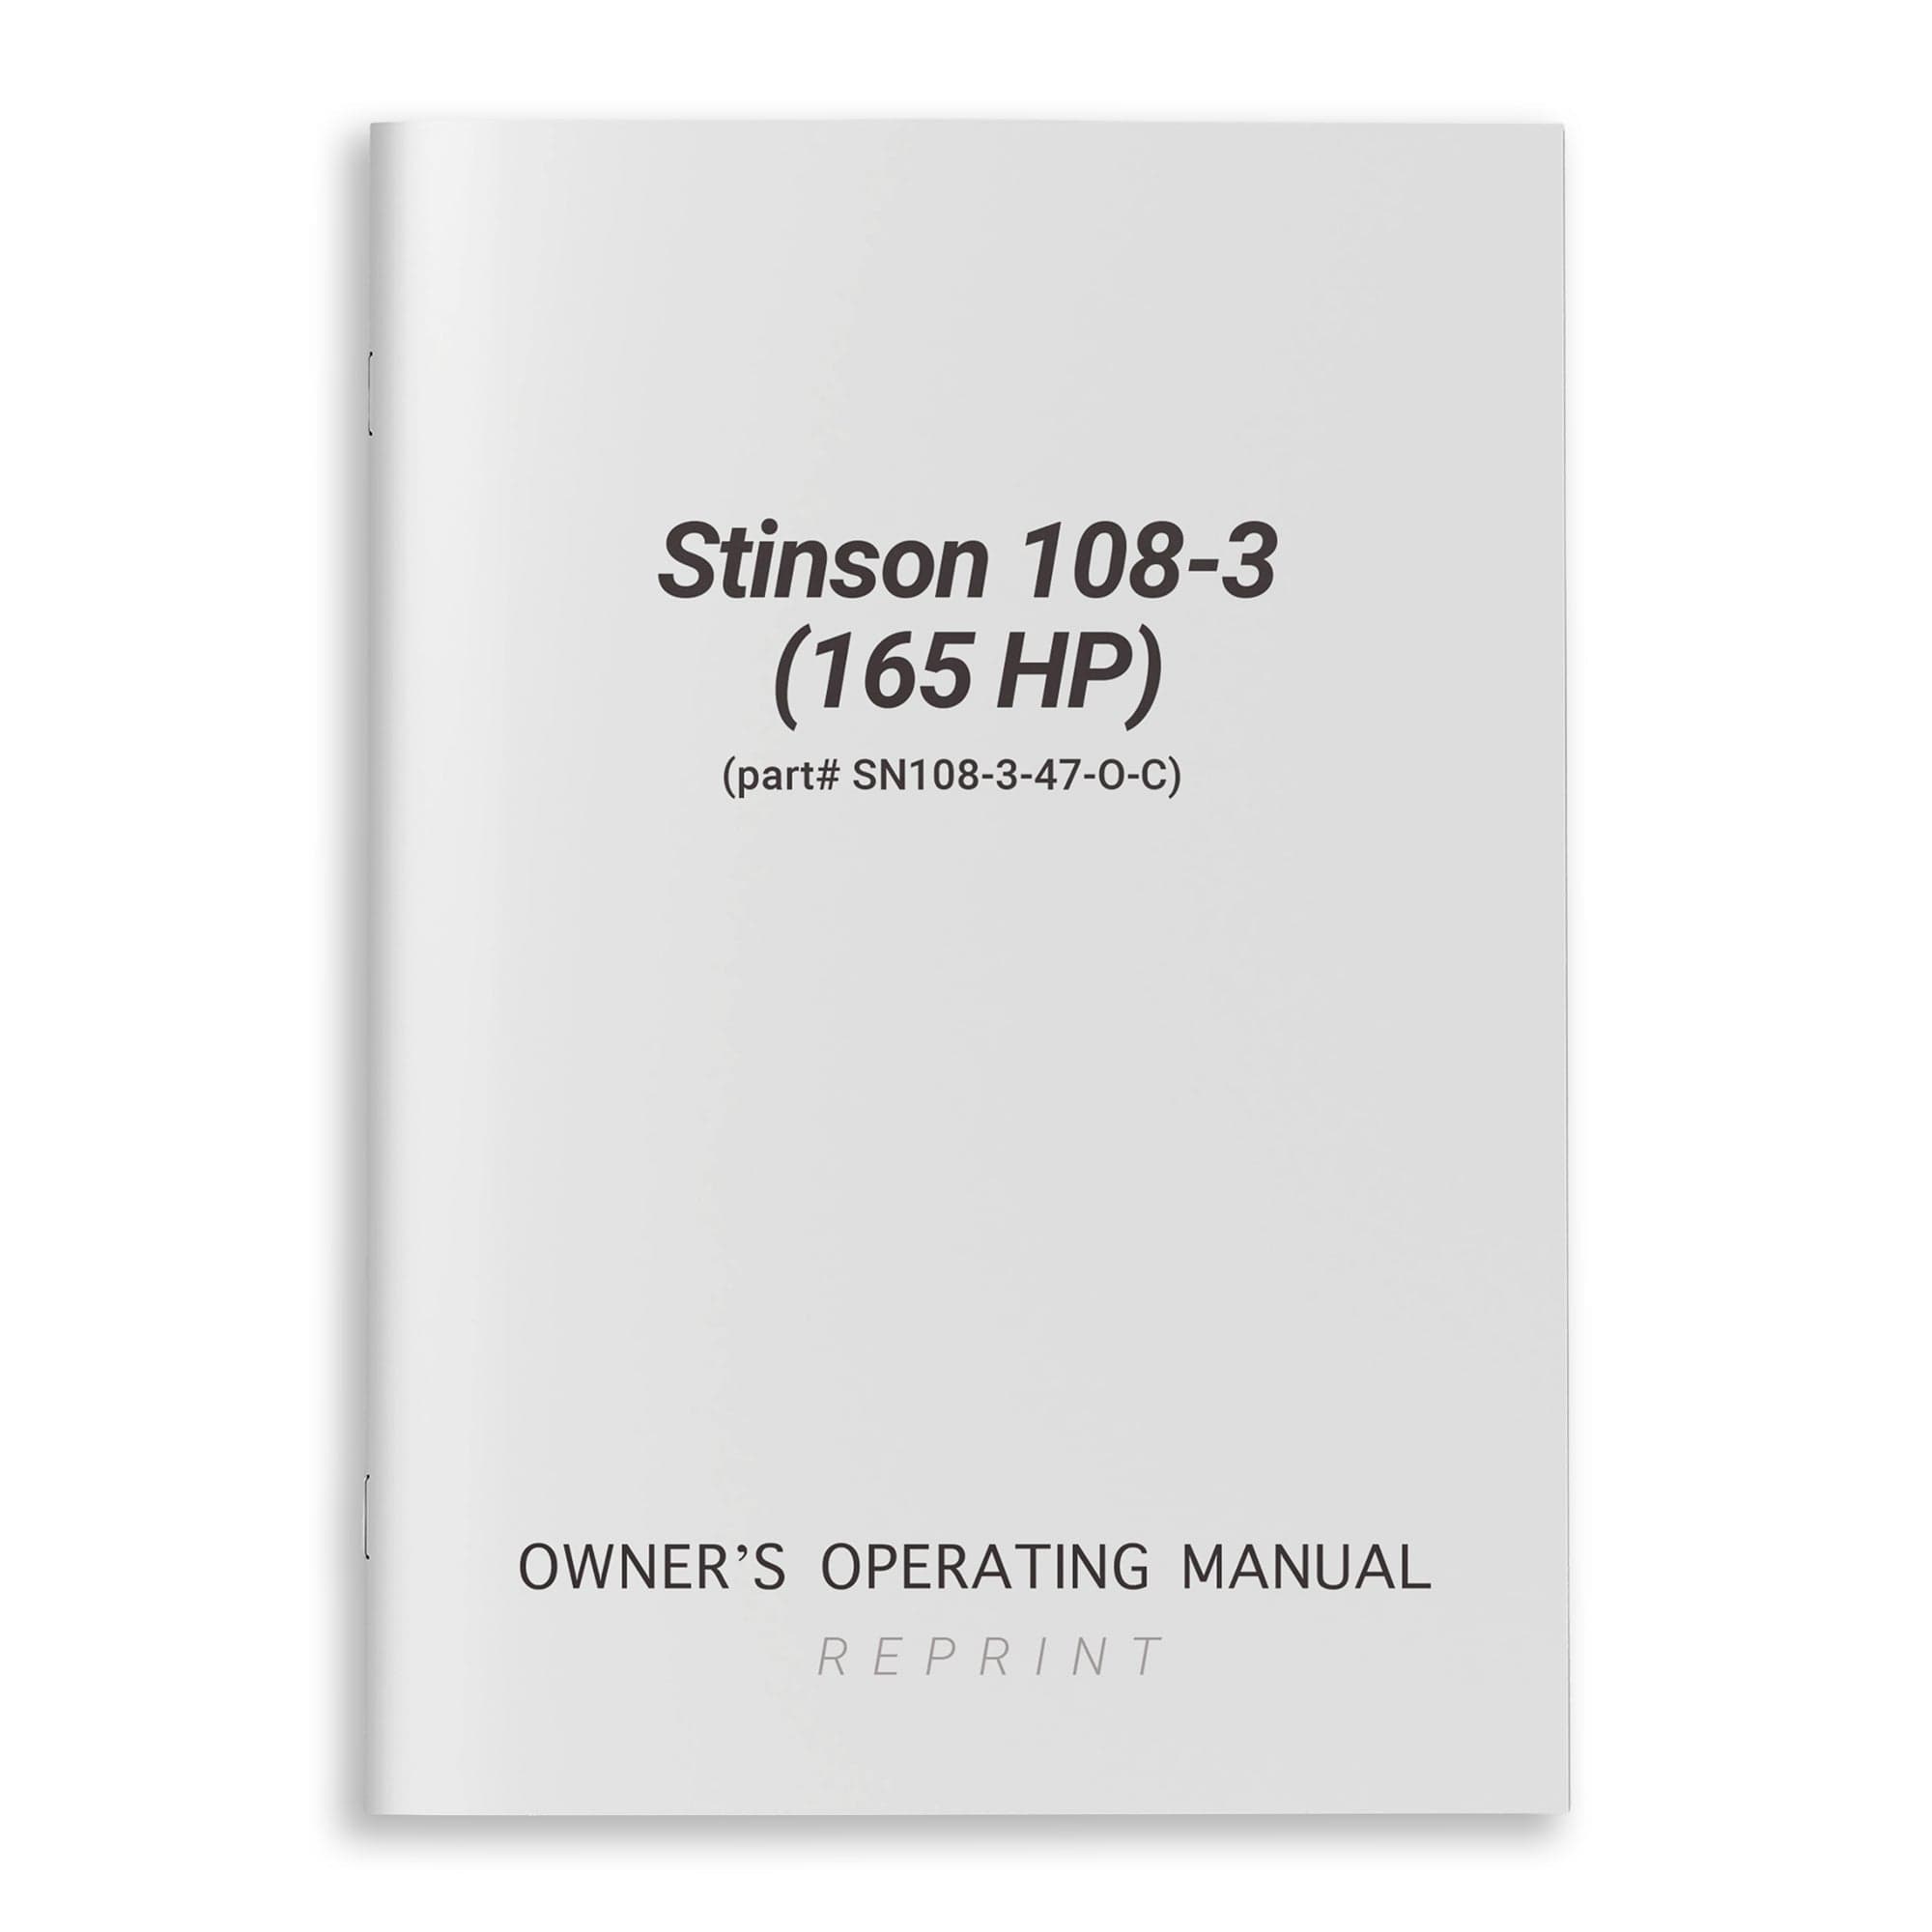 Stinson 108-3 (165 HP) Owner's Operating Manual (part# SN108-3-47-O-C)